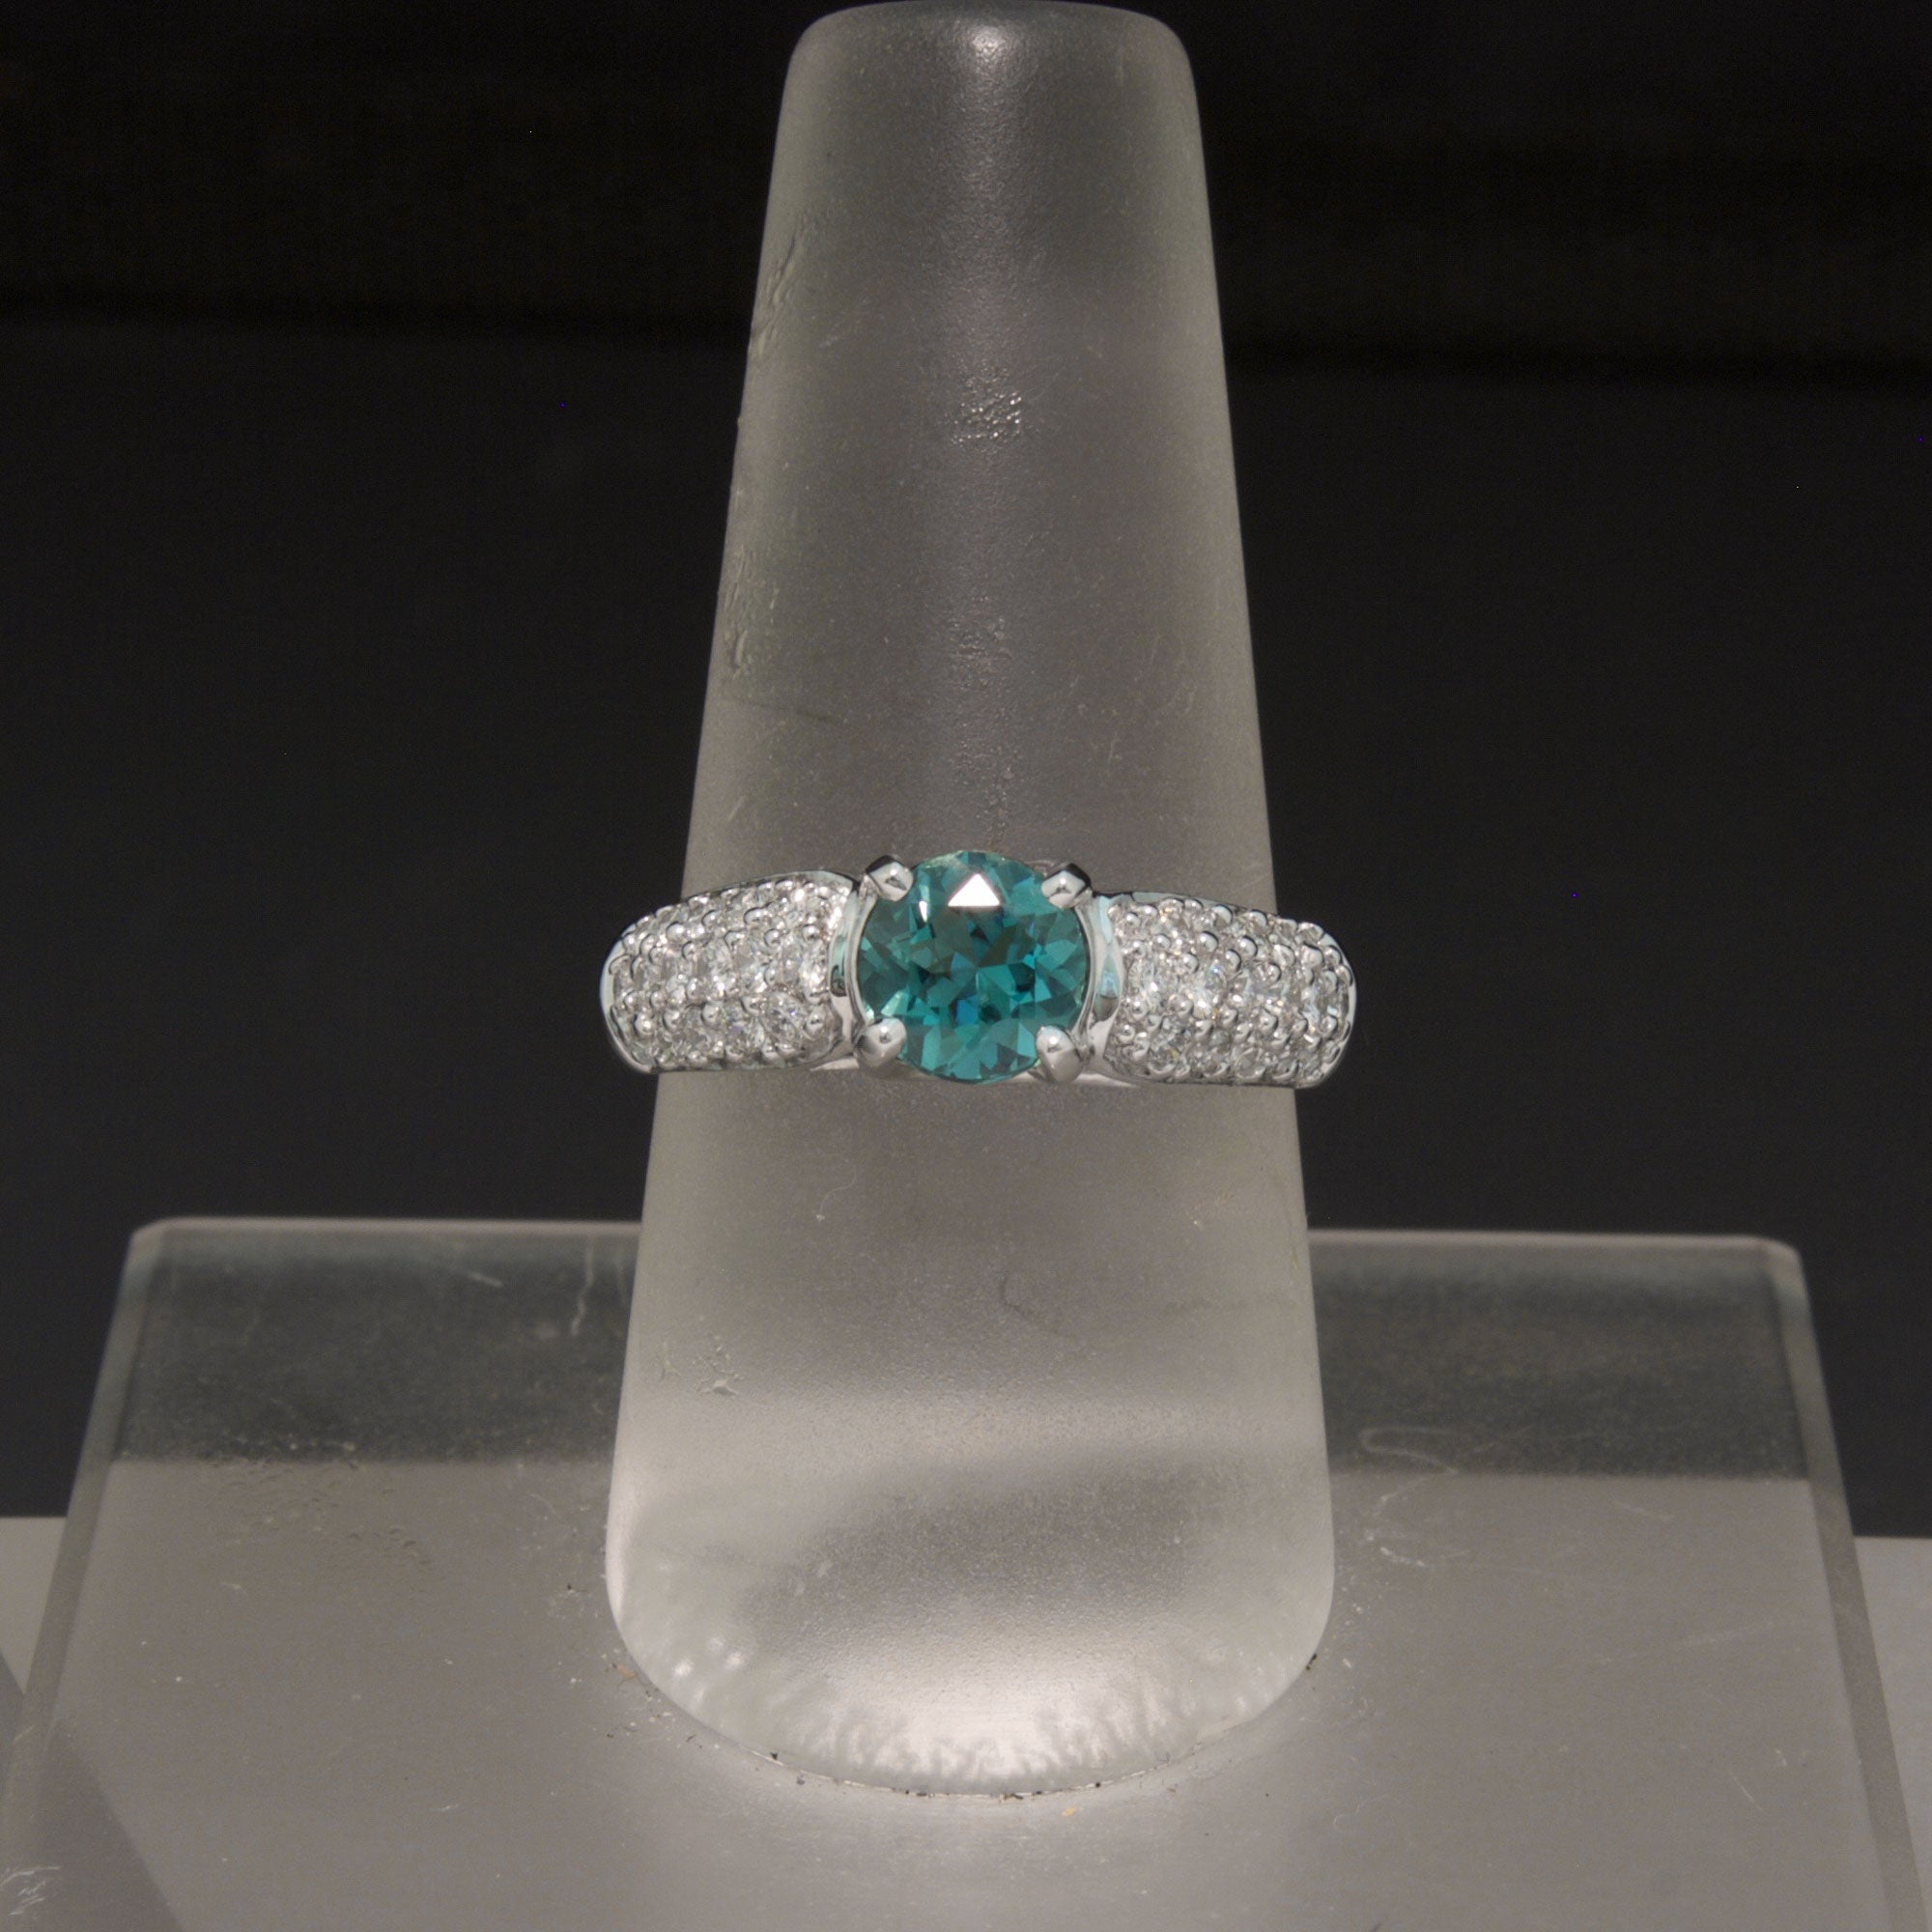 Green Tourmaline Engagement Ring with Diamonds - London Victorian Ring –  The London Victorian Ring Co